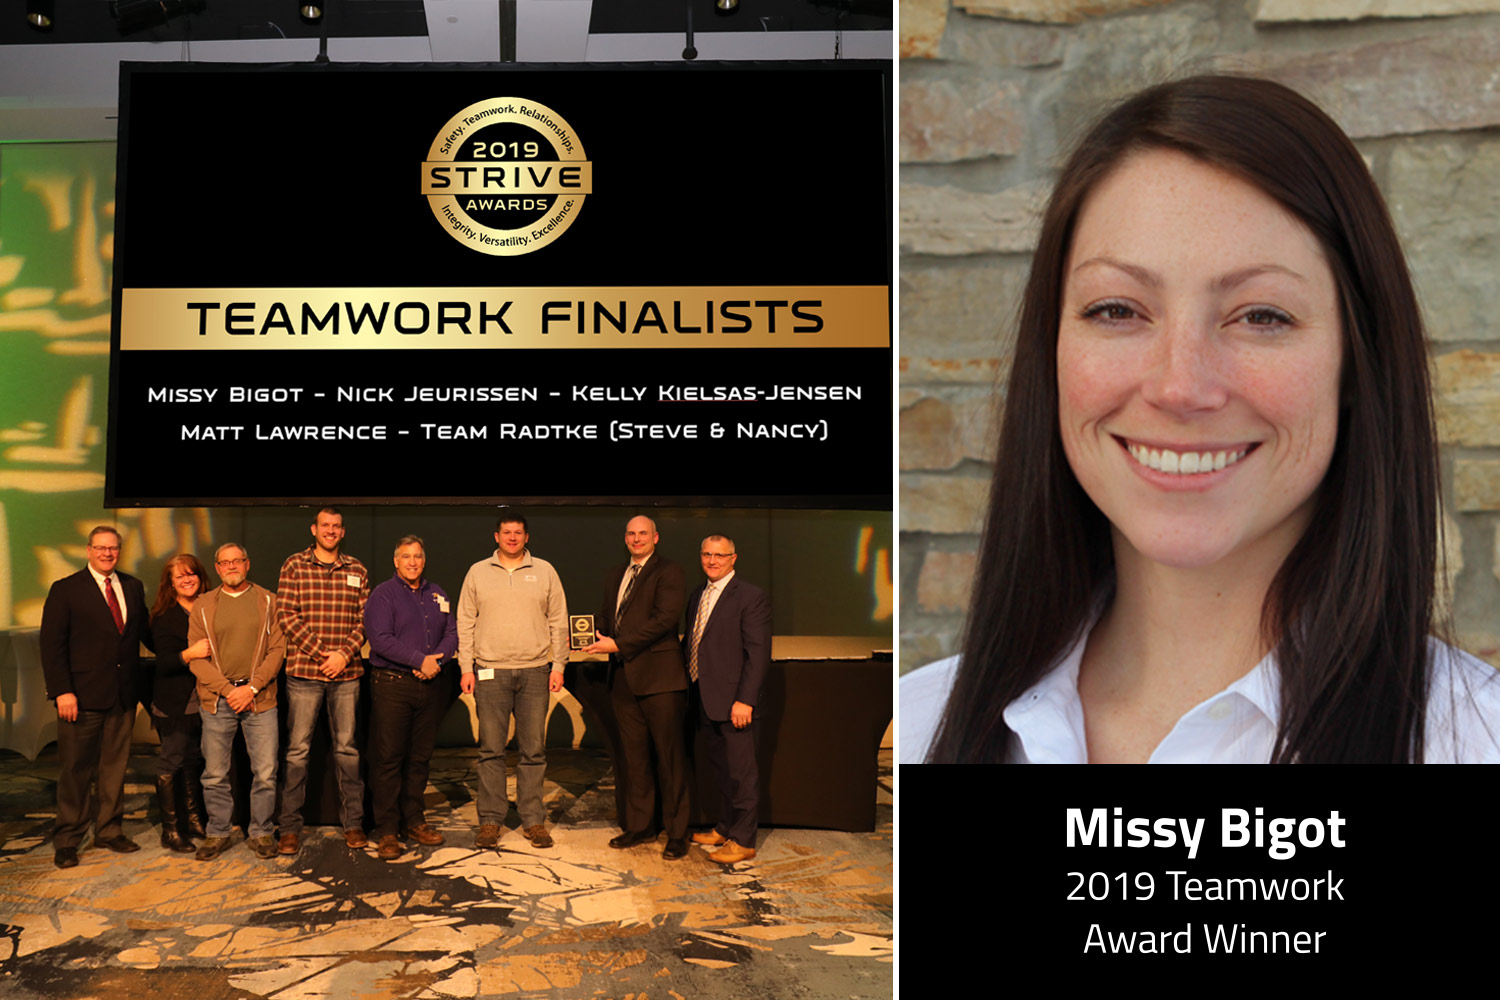 Missy Bigot, 2019 Teamwork Award Winner